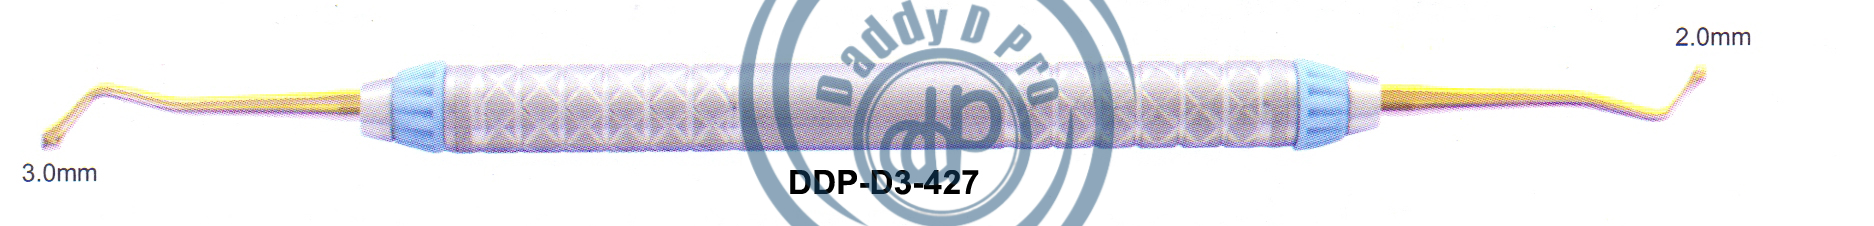 images/DDP-D3-427.png